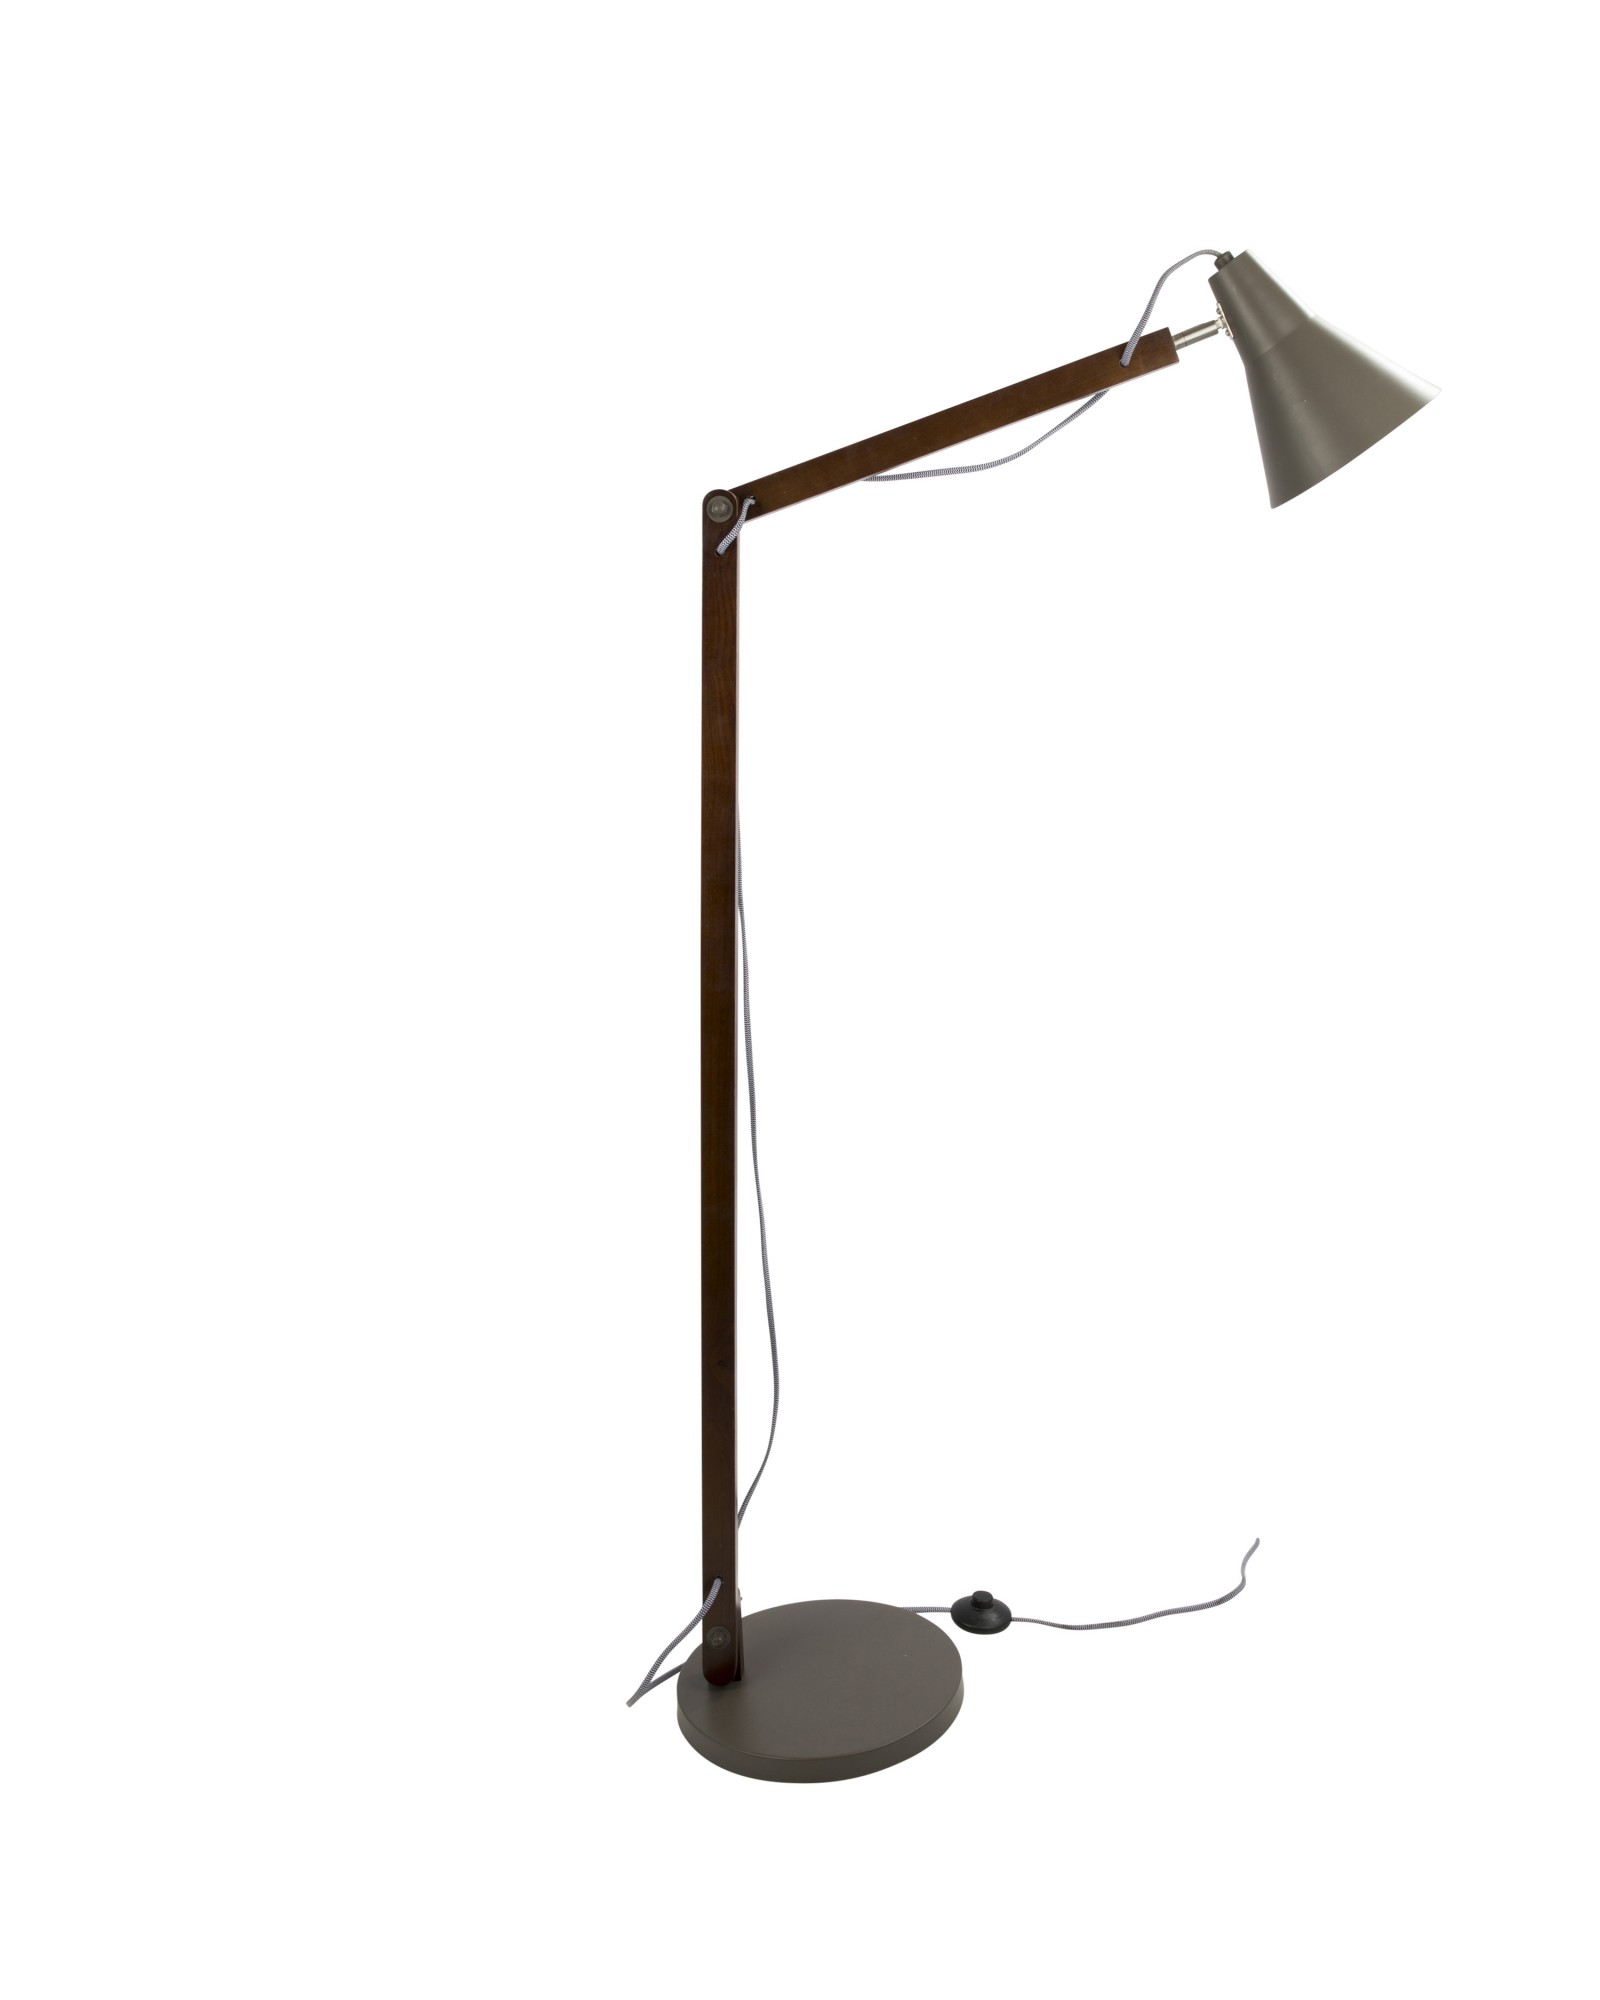 Oregon Industrial Adjustable Floor Lamp in Walnut and Grey